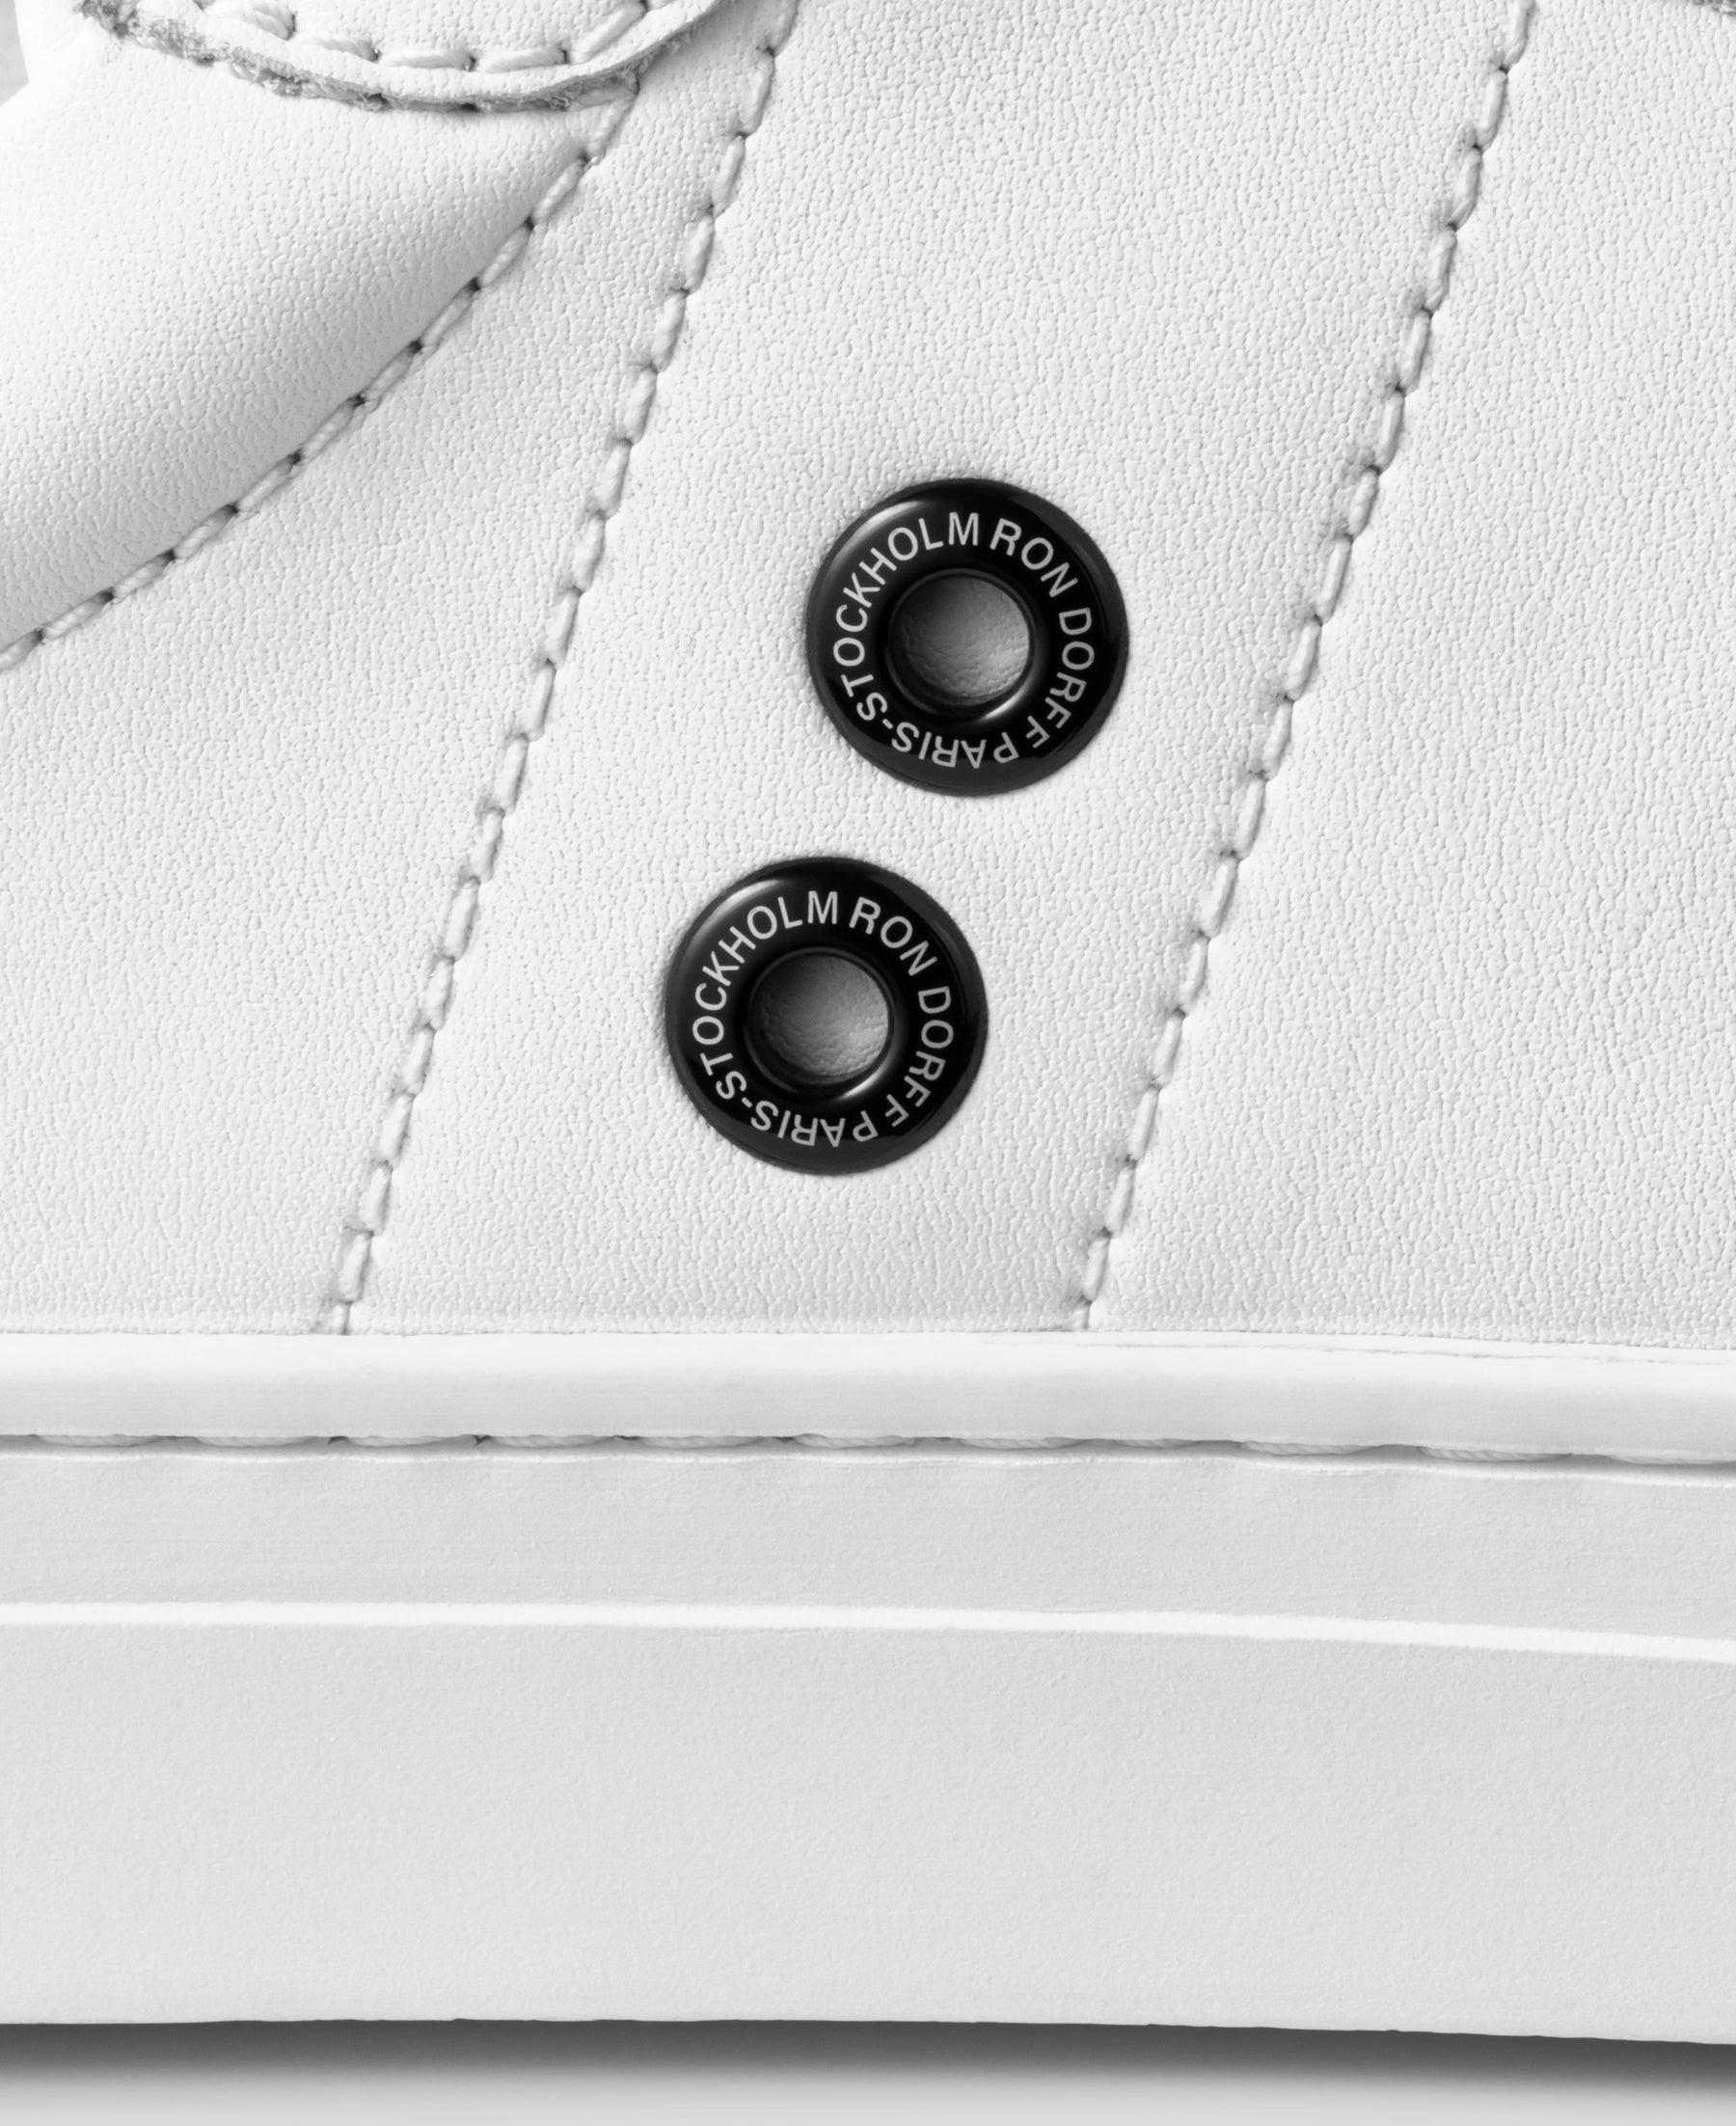 Urban Tennis Shoes: White